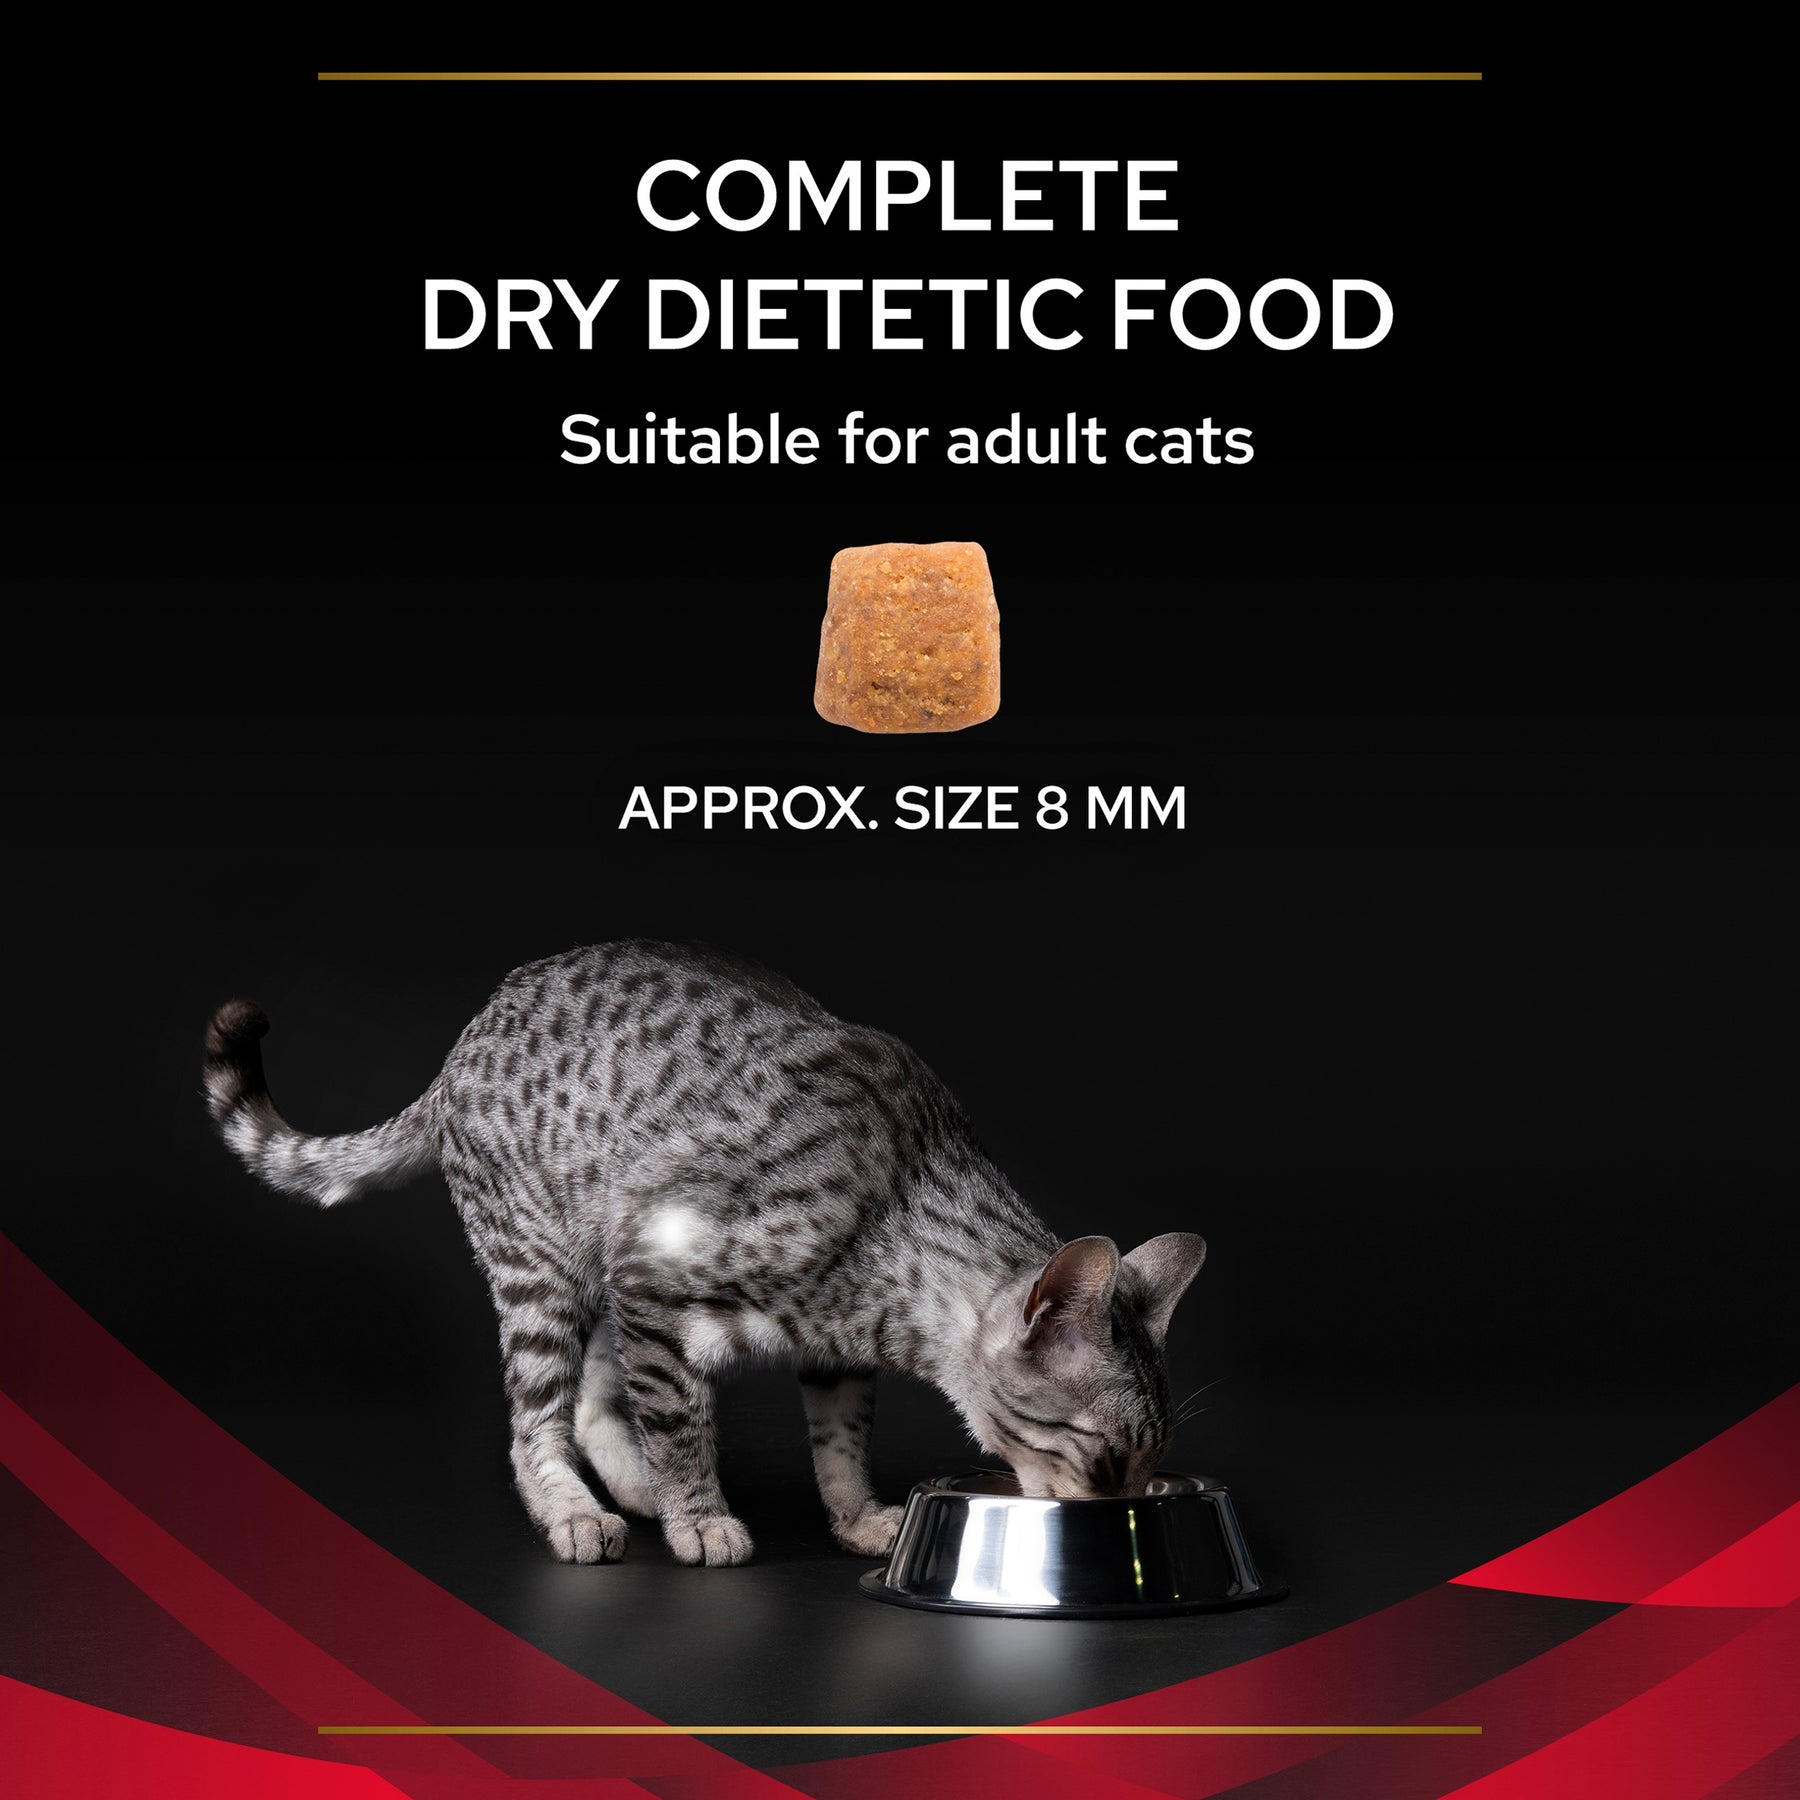 PURINA® PRO PLAN® Veterinary Diets - Feline DM ST/OX Diabetes Management